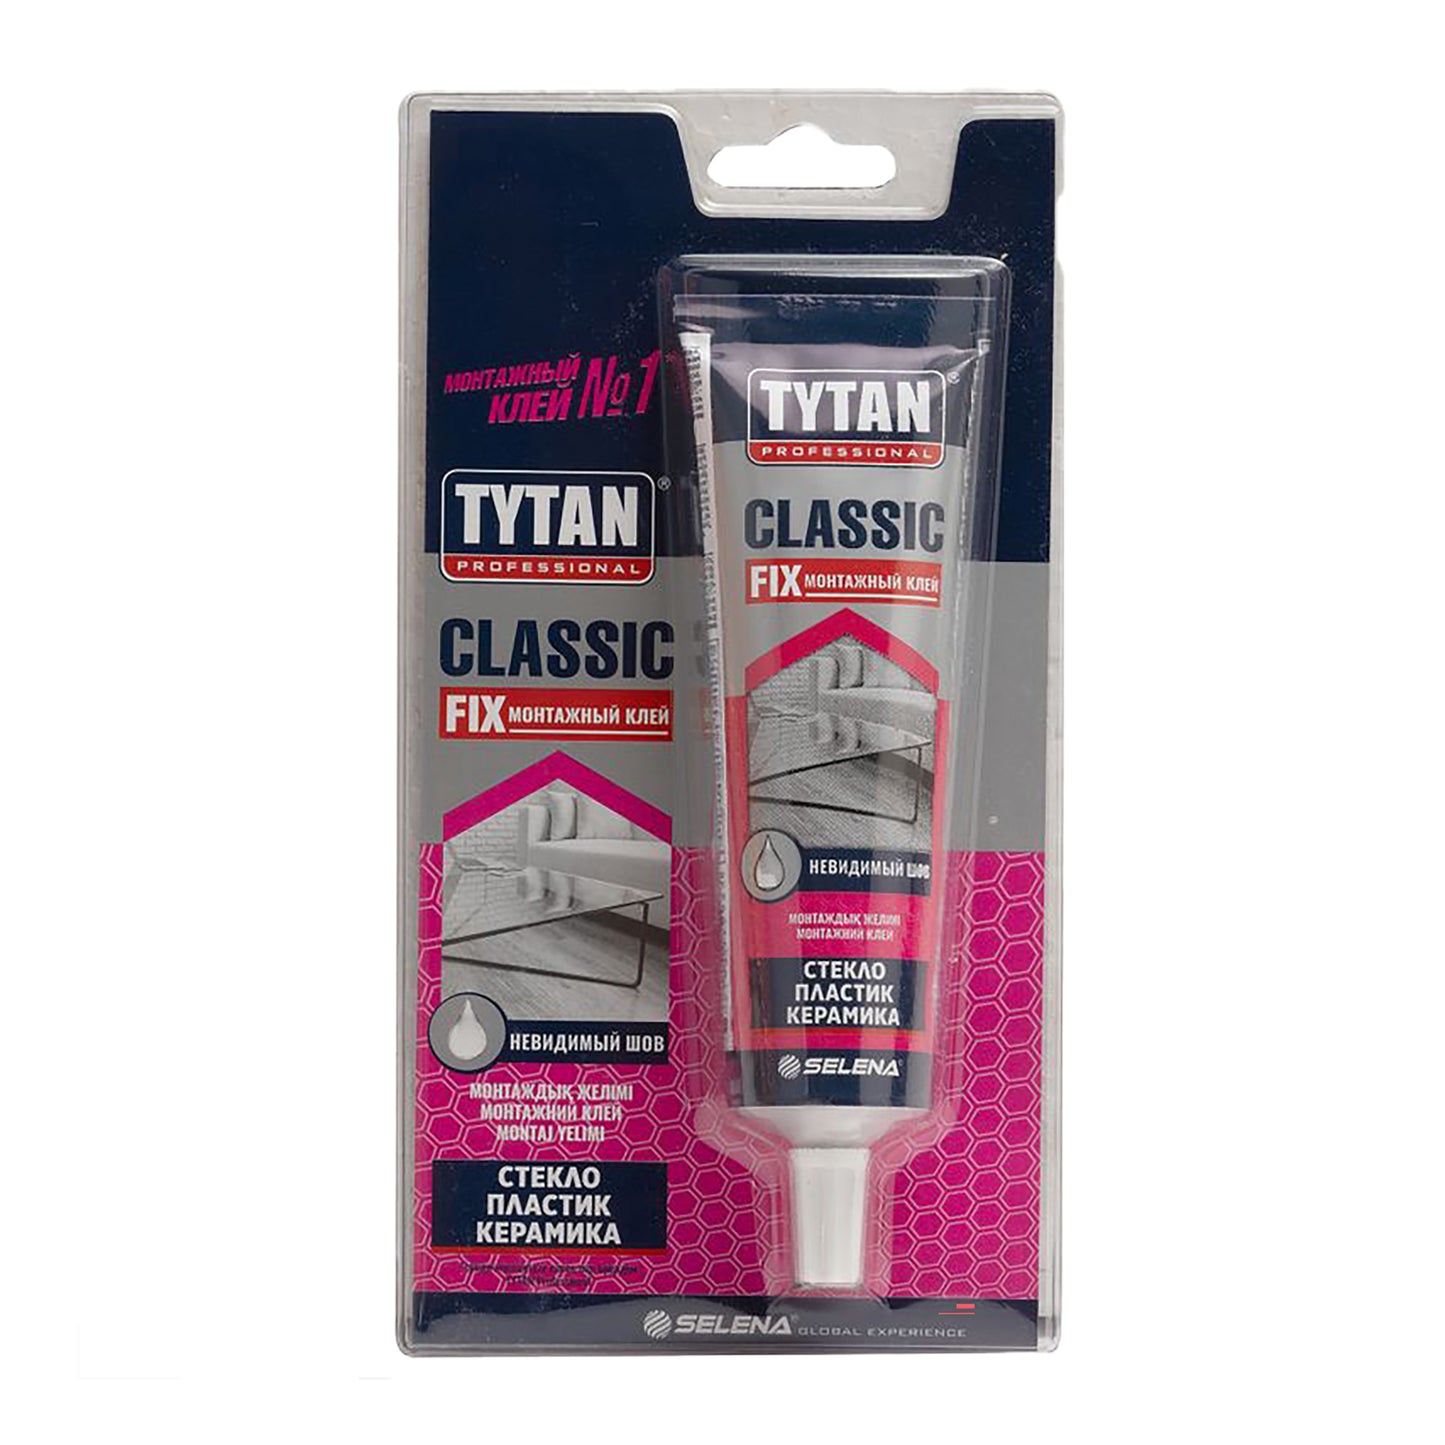 TYT-35480V04-100 - монтажный клей Tytan Professional Classic Fix, тюбик: 100 мл.